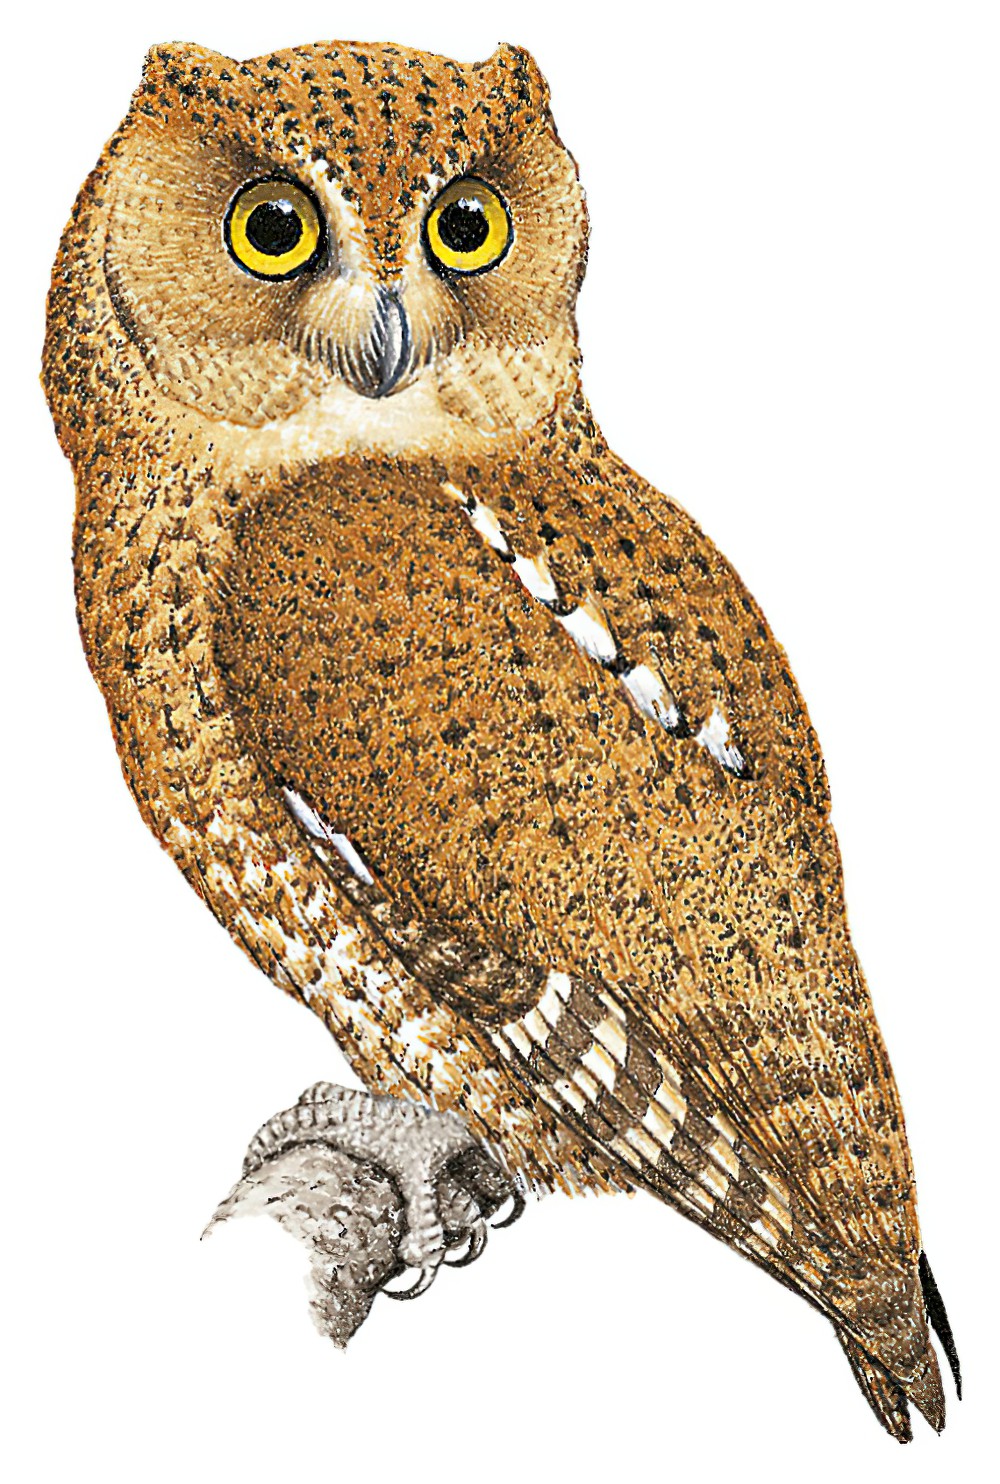 Bare-shanked Screech-Owl / Megascops clarkii